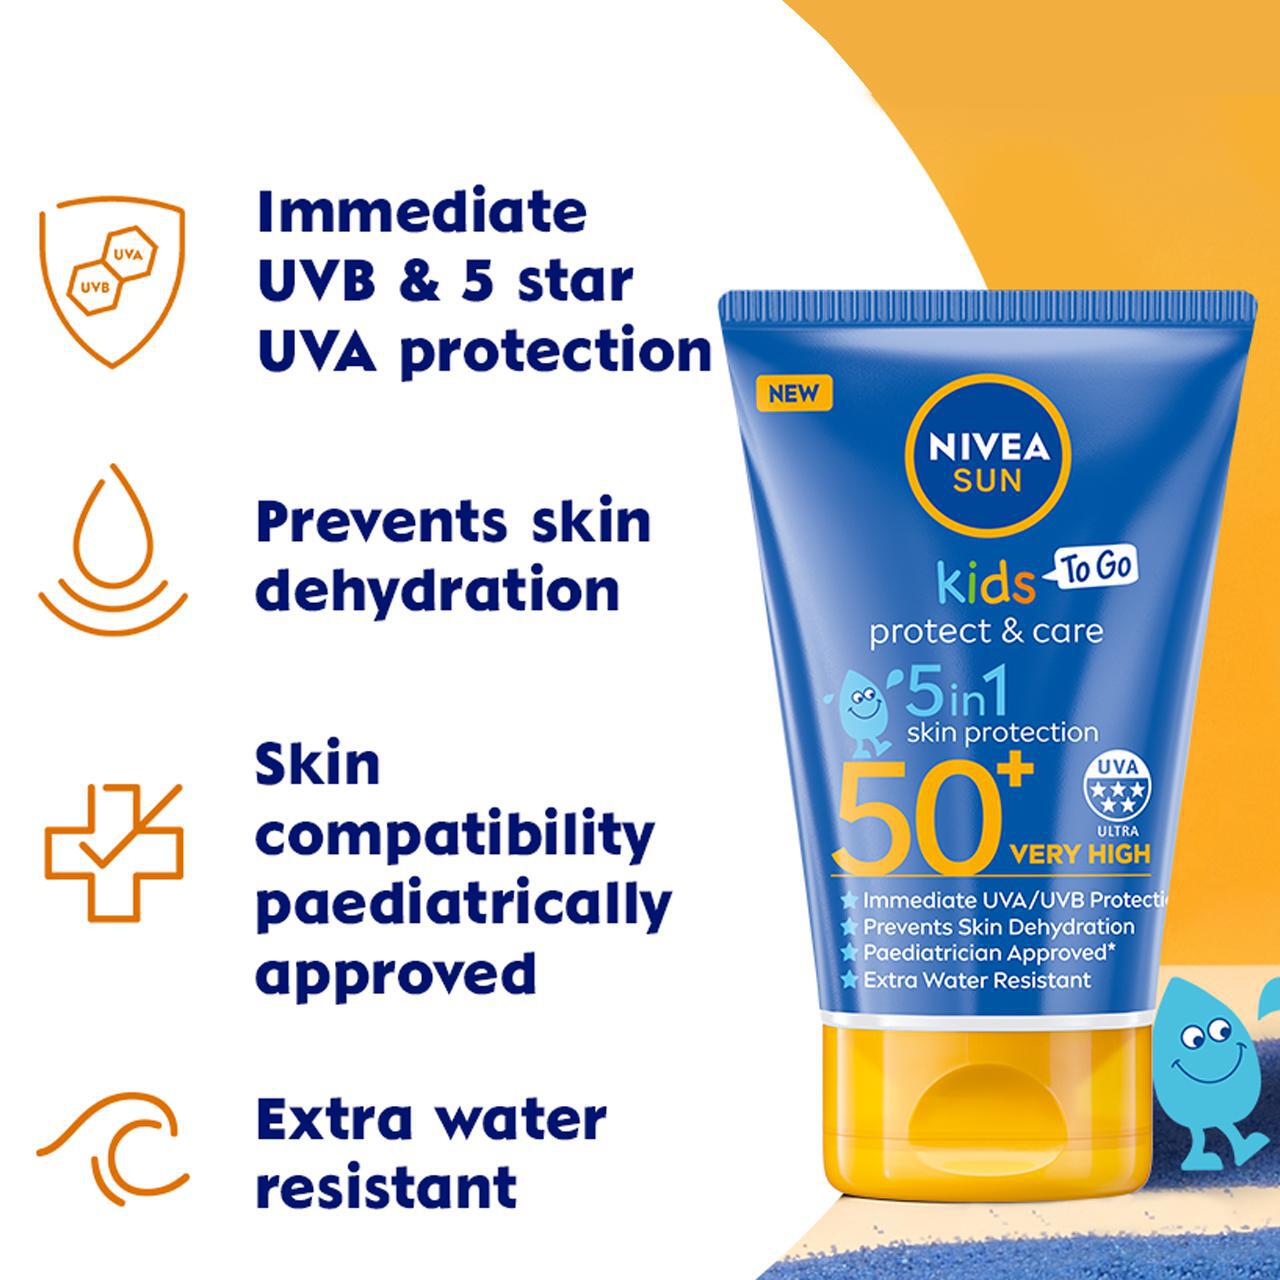 NIVEA SUN Kids Protect & Care SPF 50+ Sun Cream Pocket Size 50ml